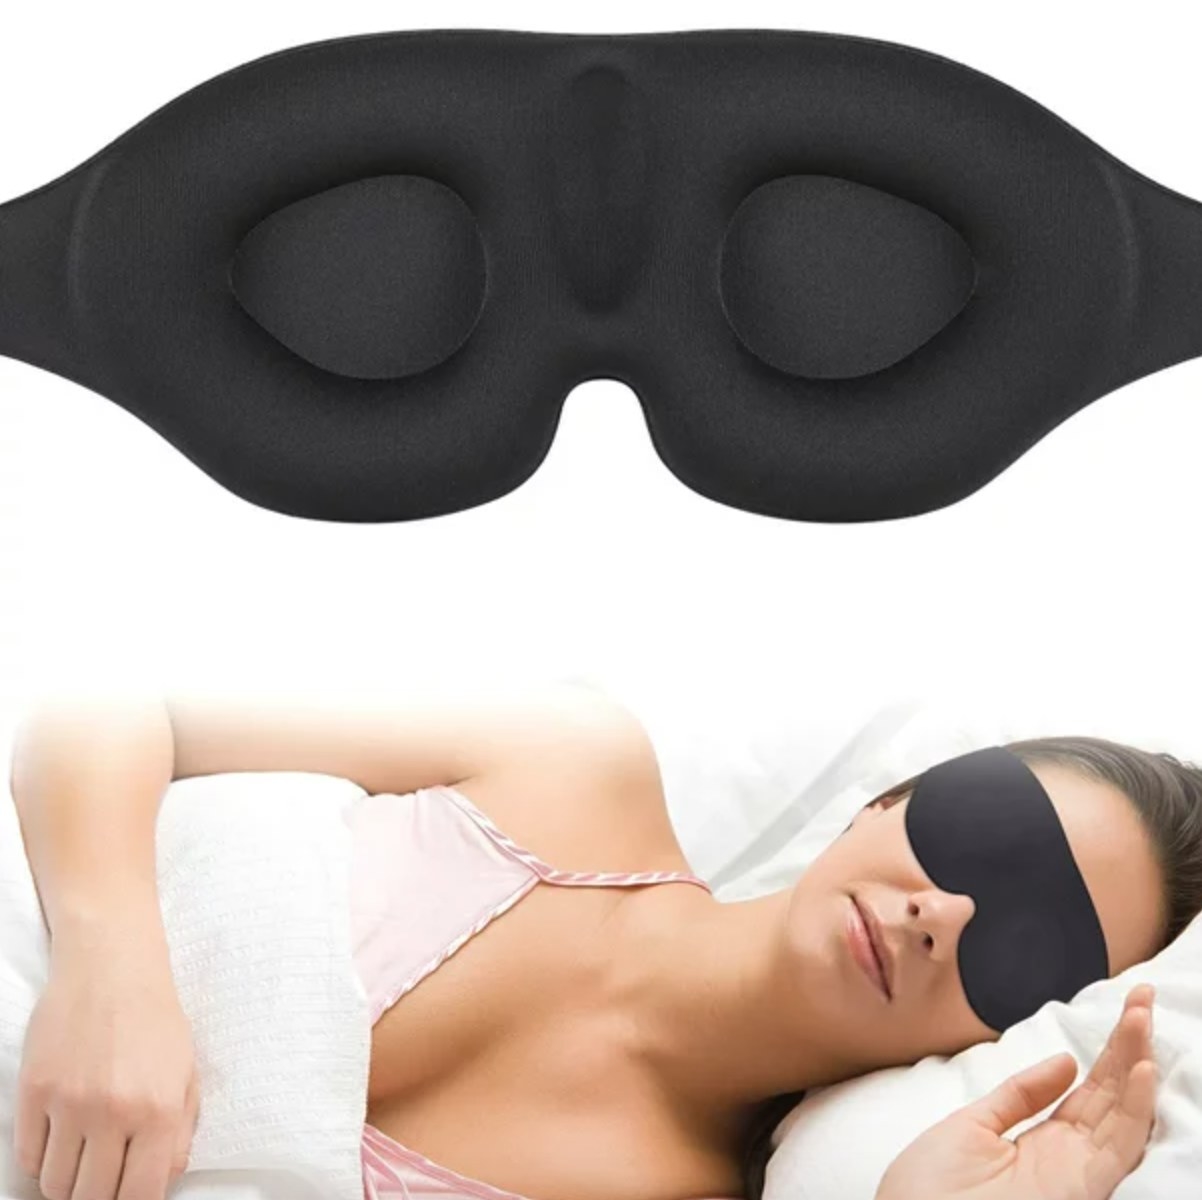 model wearing the black sleep mask